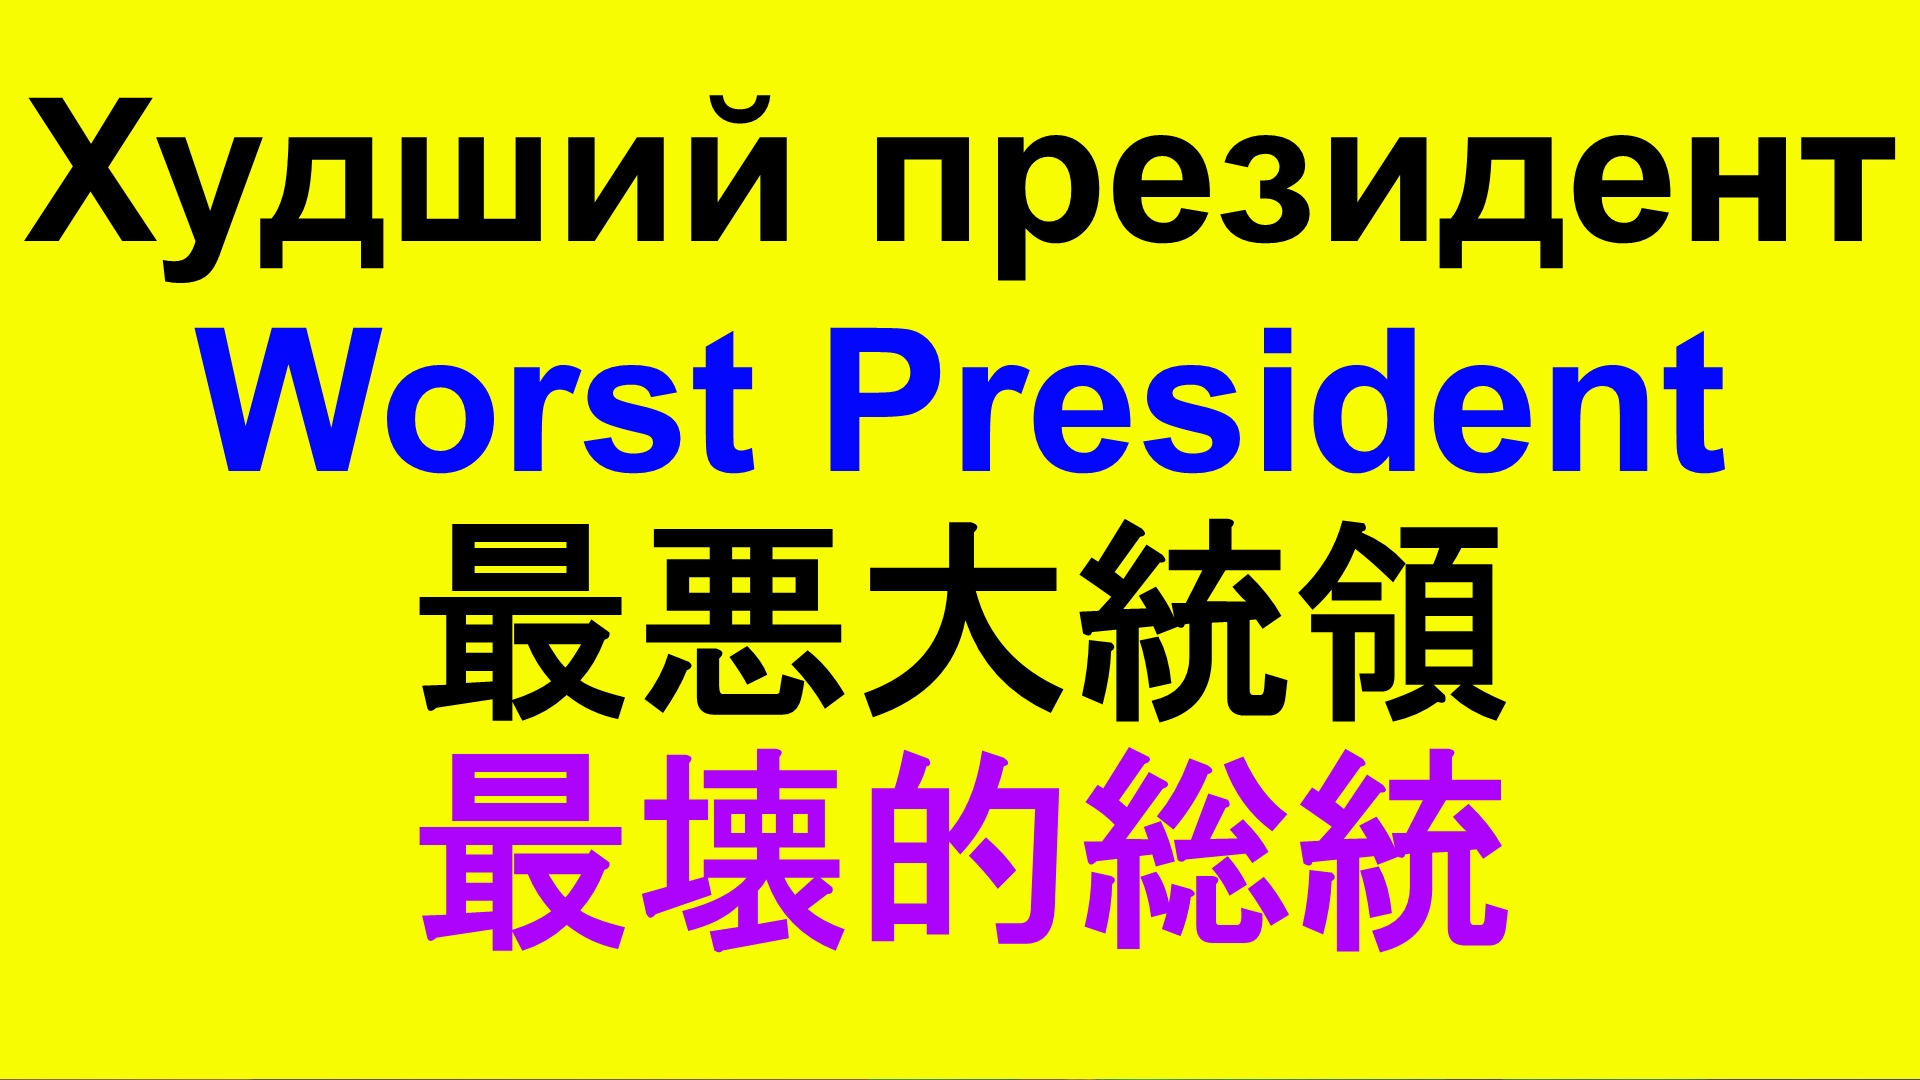 Украина худший президент Зеленский Ukraine worst president 最悪大統領